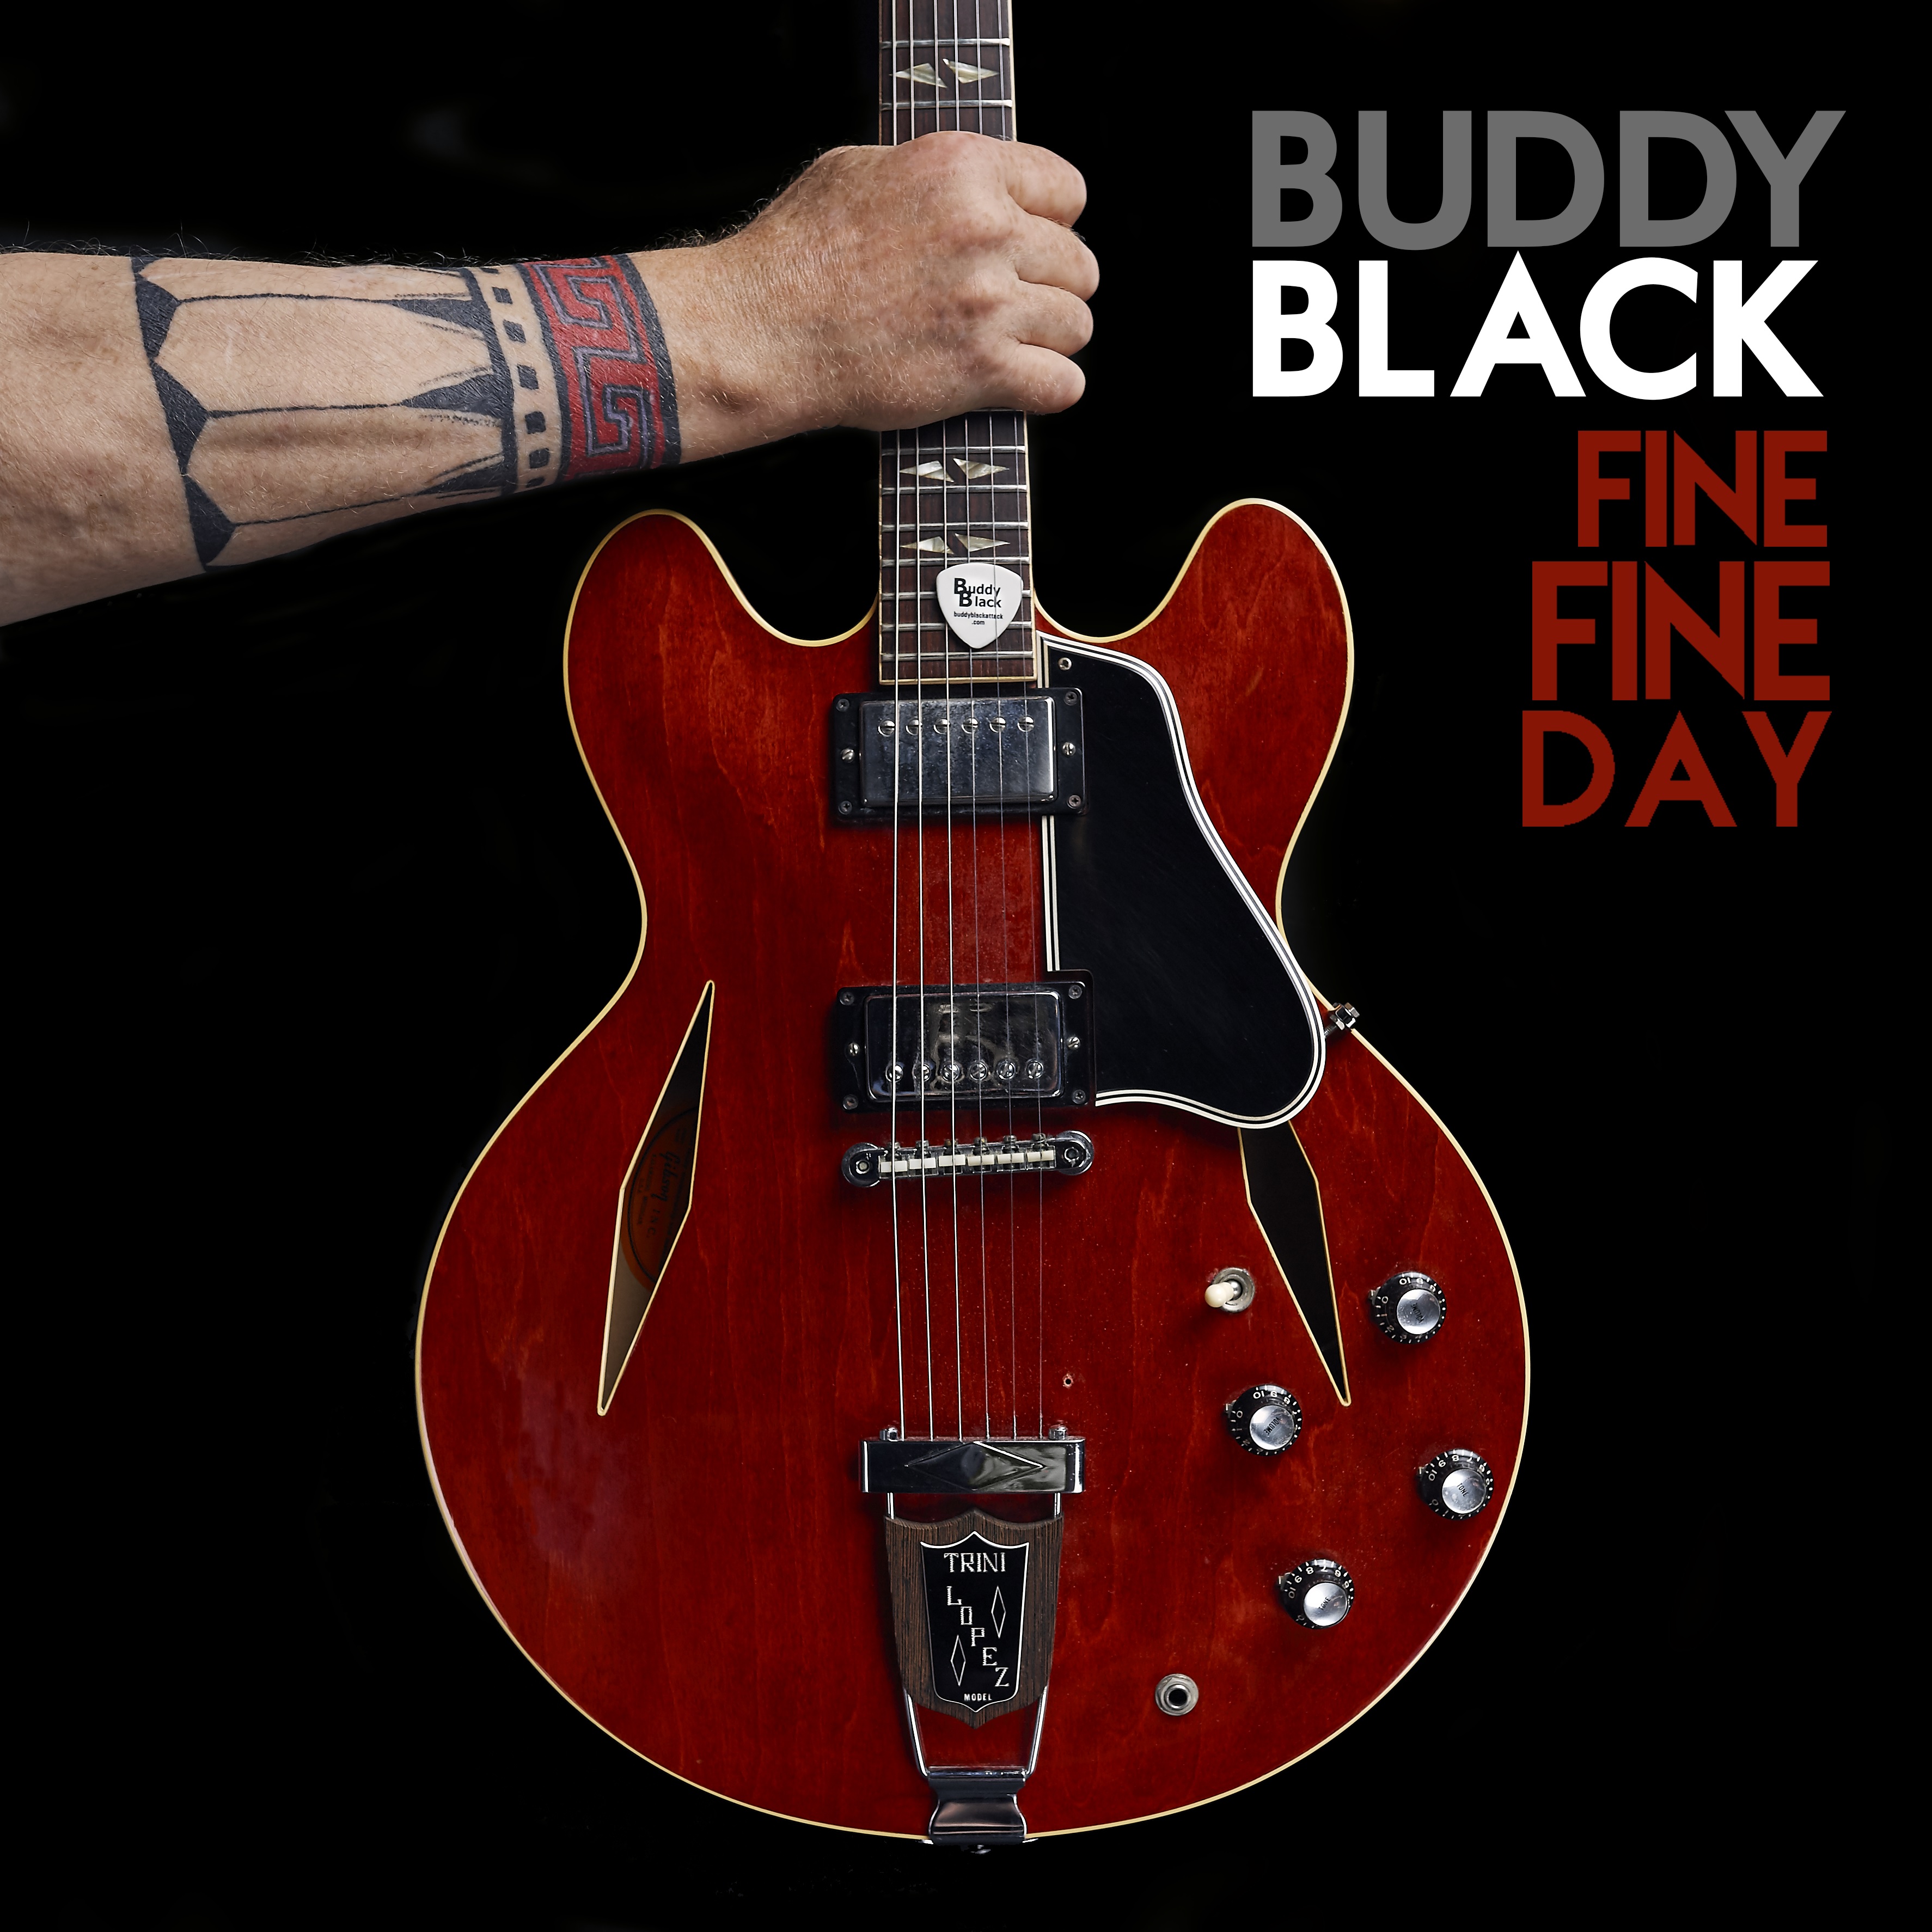 Buddy Black Fine Fine Day Album